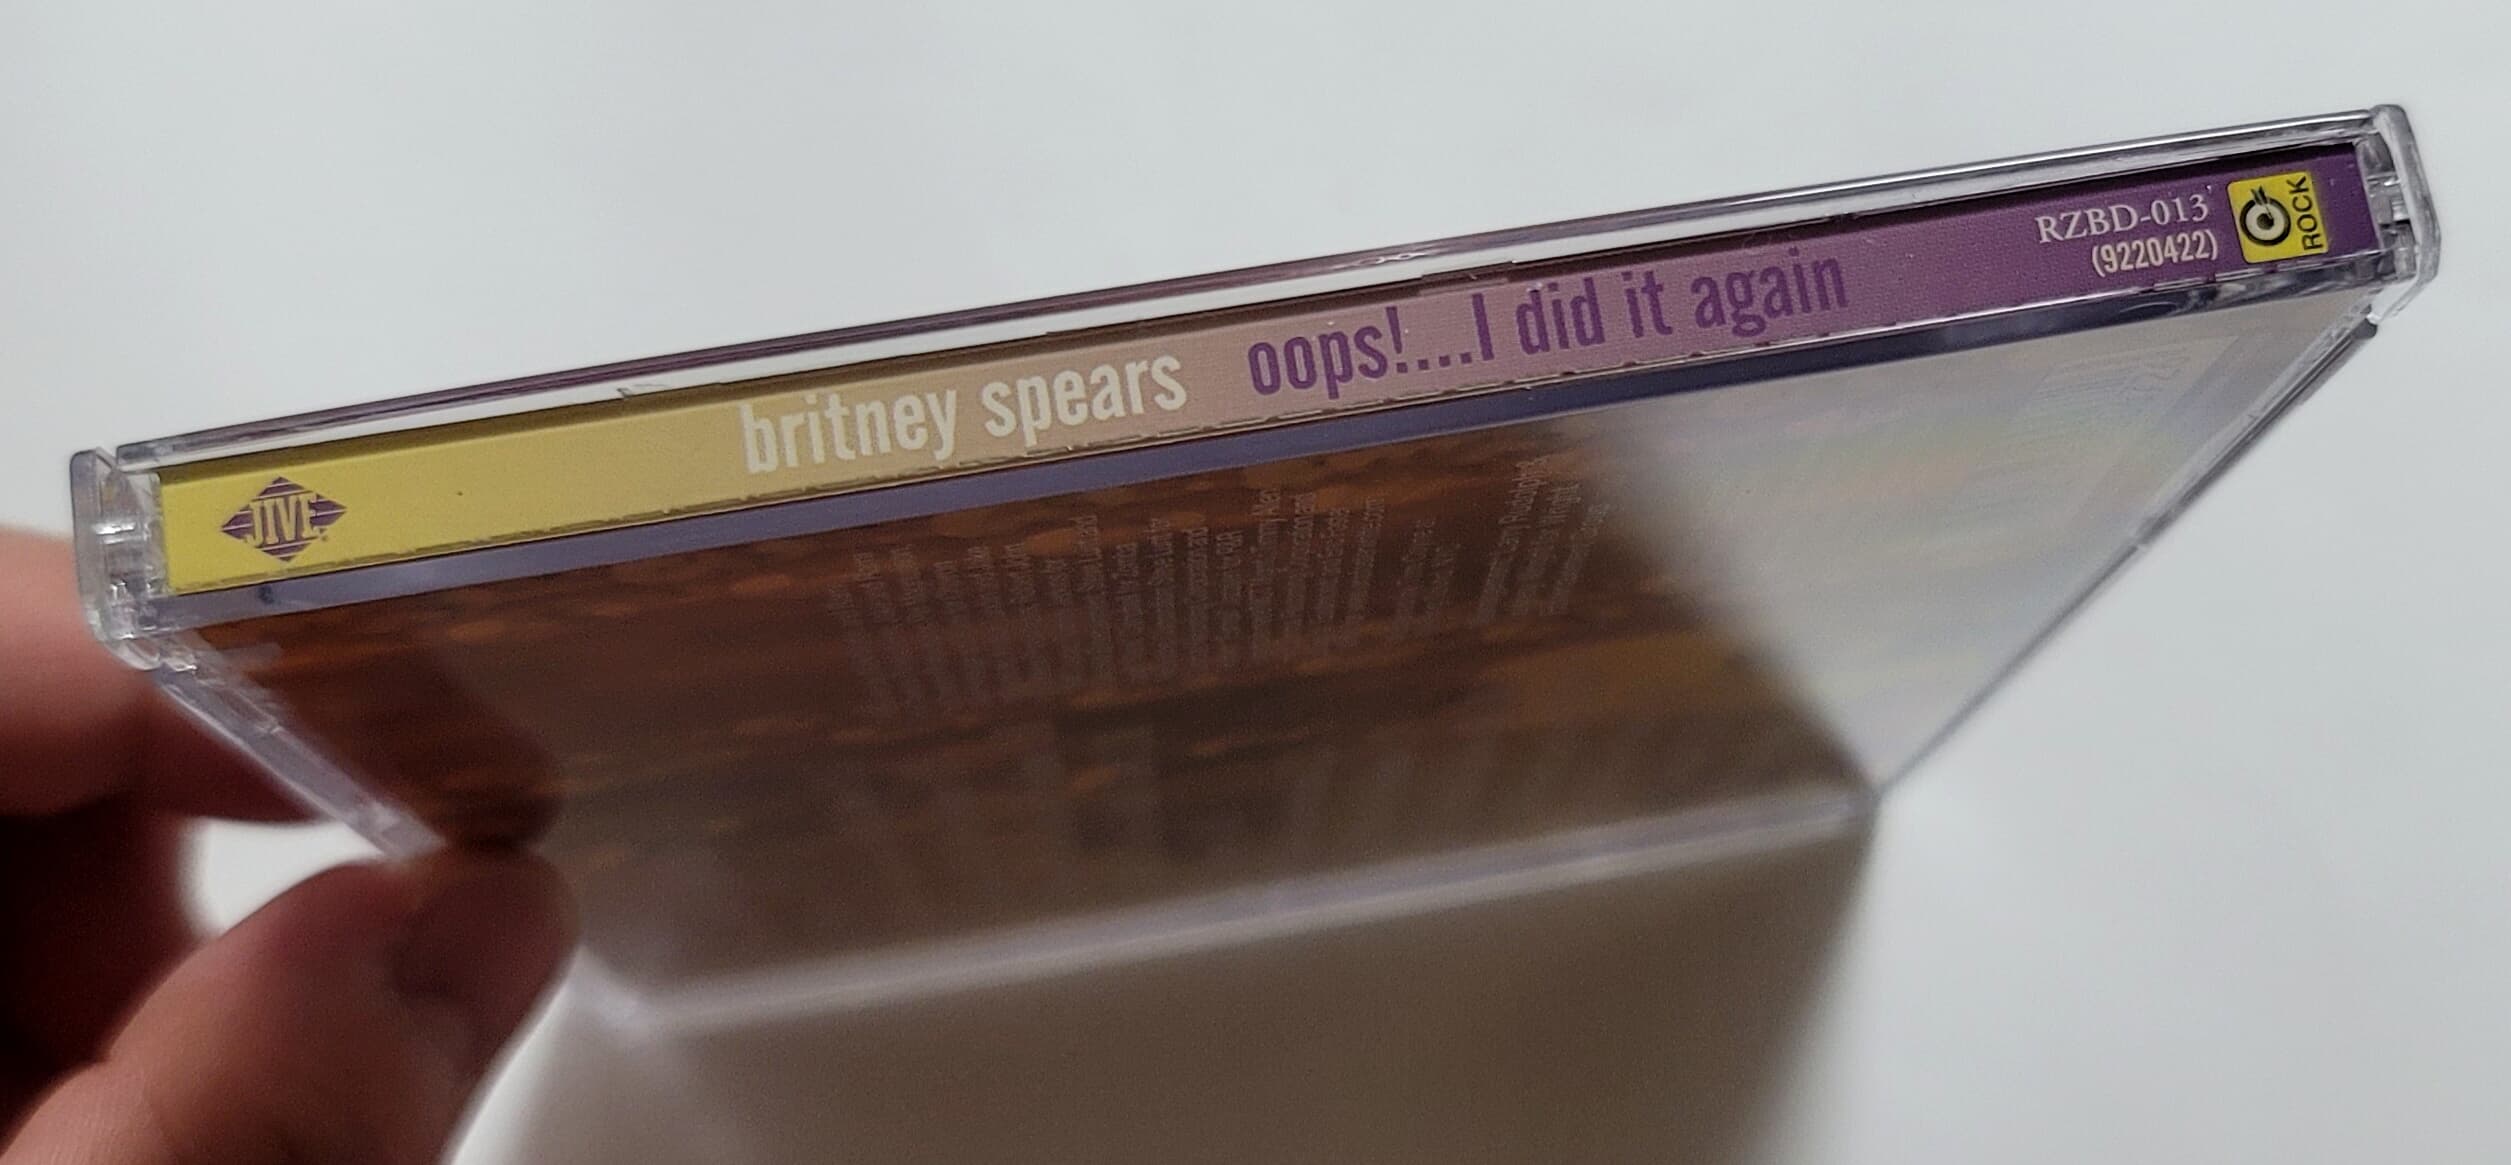 Britney Spears (브리트니 스피어스) - Oops I Did It Again